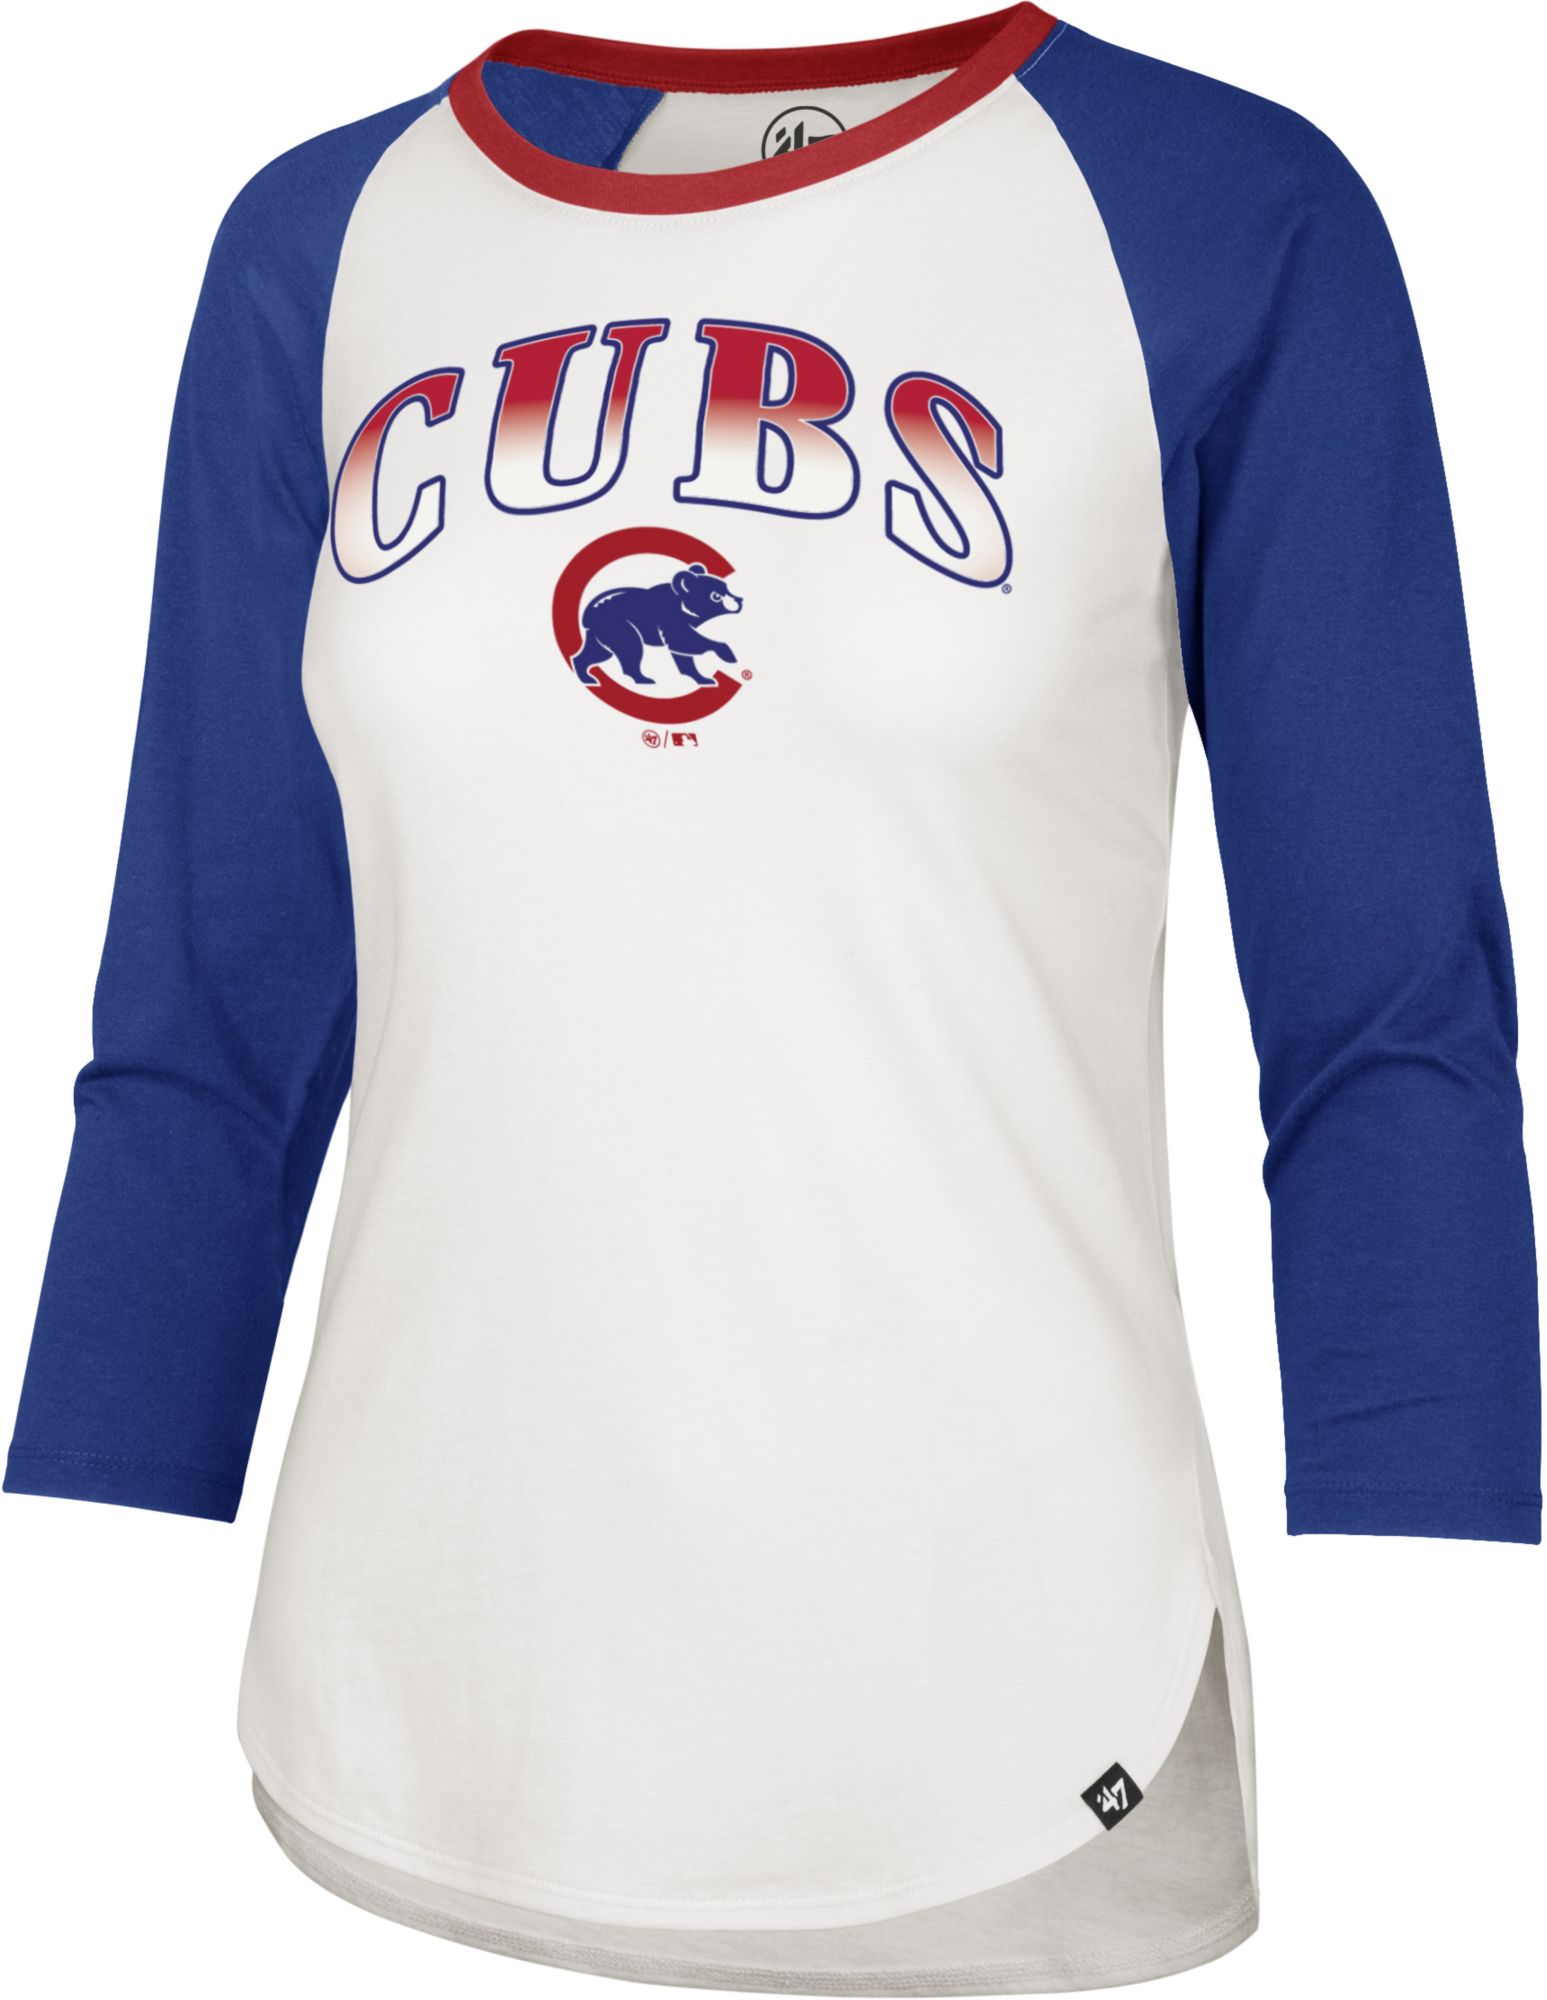 chicago cubs women's jersey